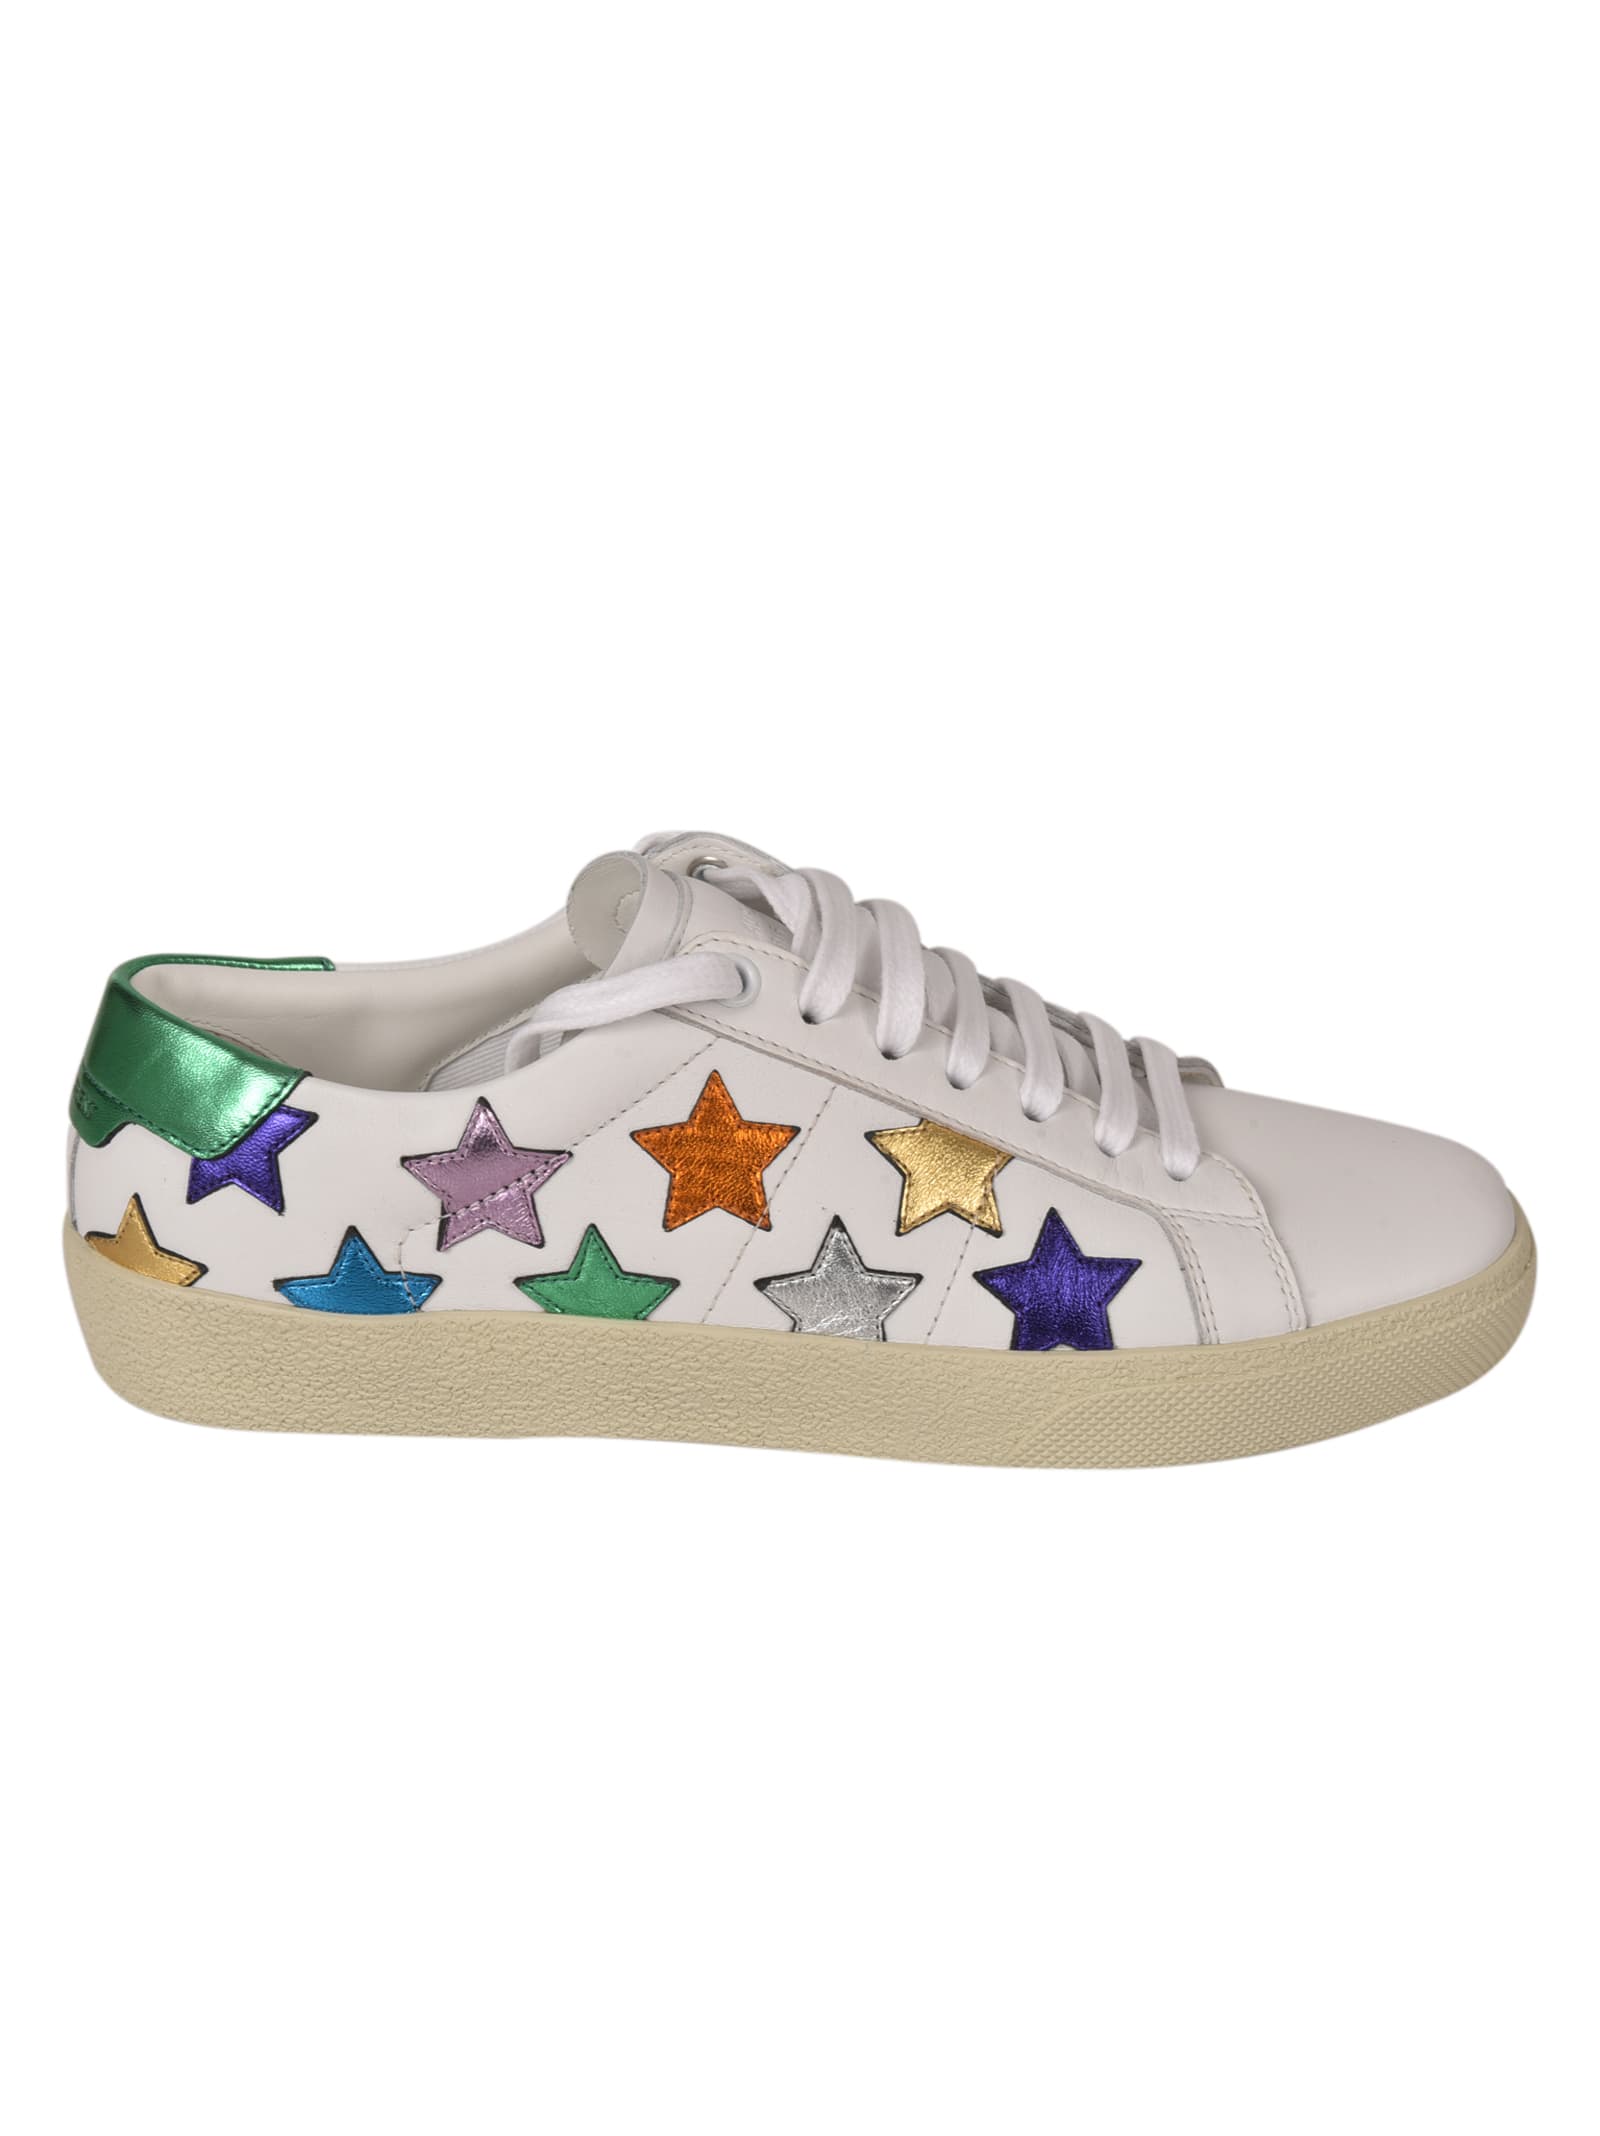 Buy Saint Laurent Star Motif Sneakers online, shop Saint Laurent shoes with free shipping